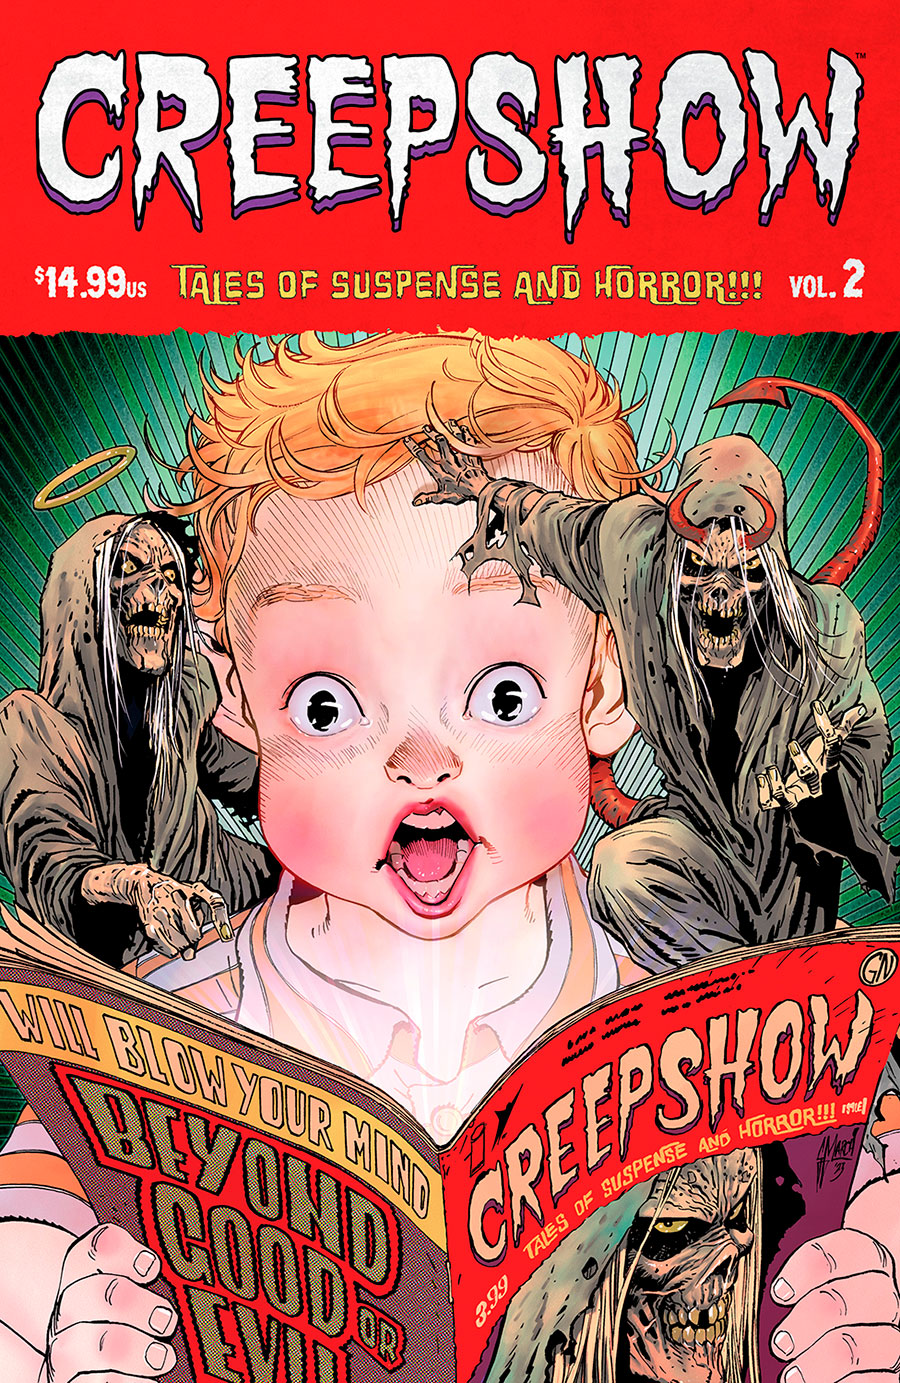 Creepshow Tales Of Suspense And Horror Vol 2 TP